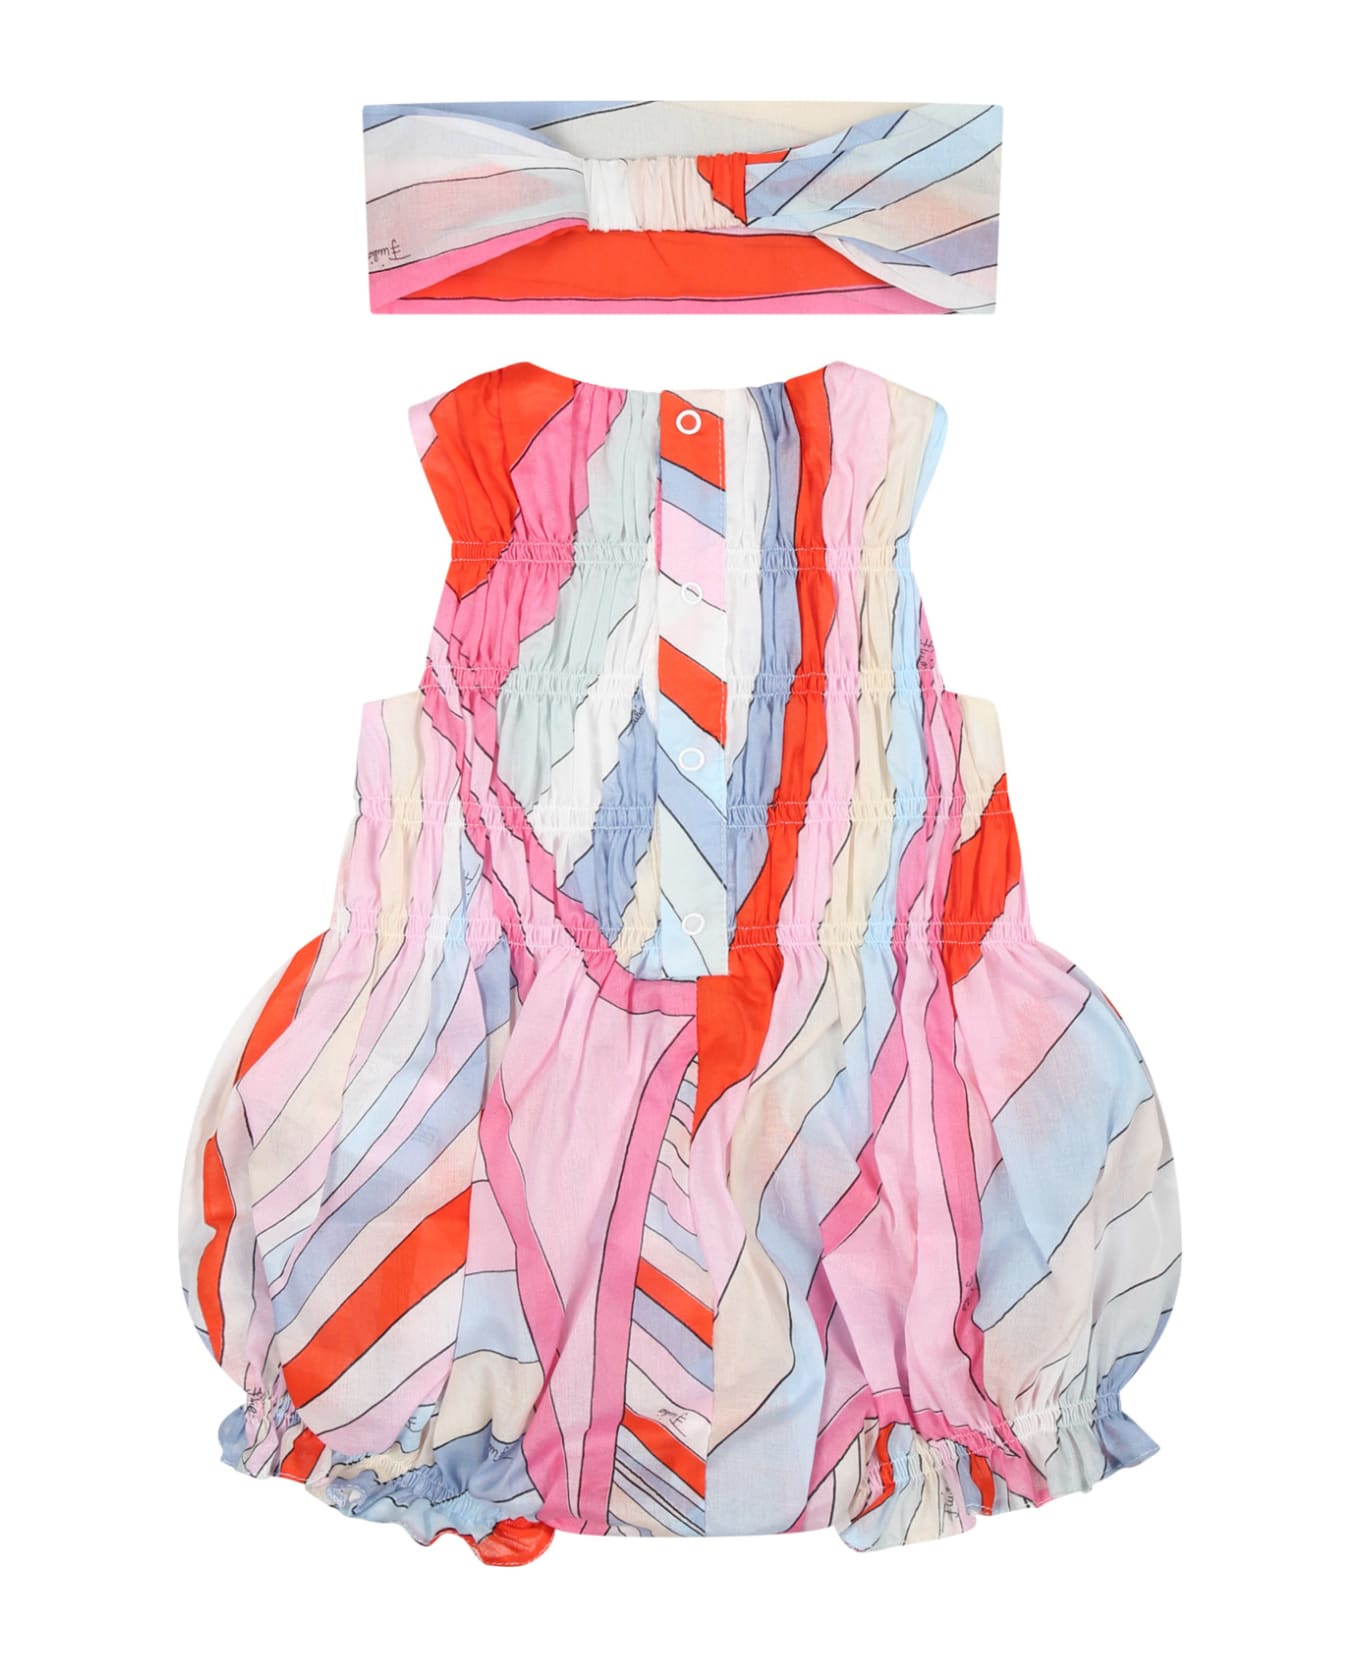 Pucci Multicolor Romper For Baby Girl With Iconic Multicolor Print - Multicolor